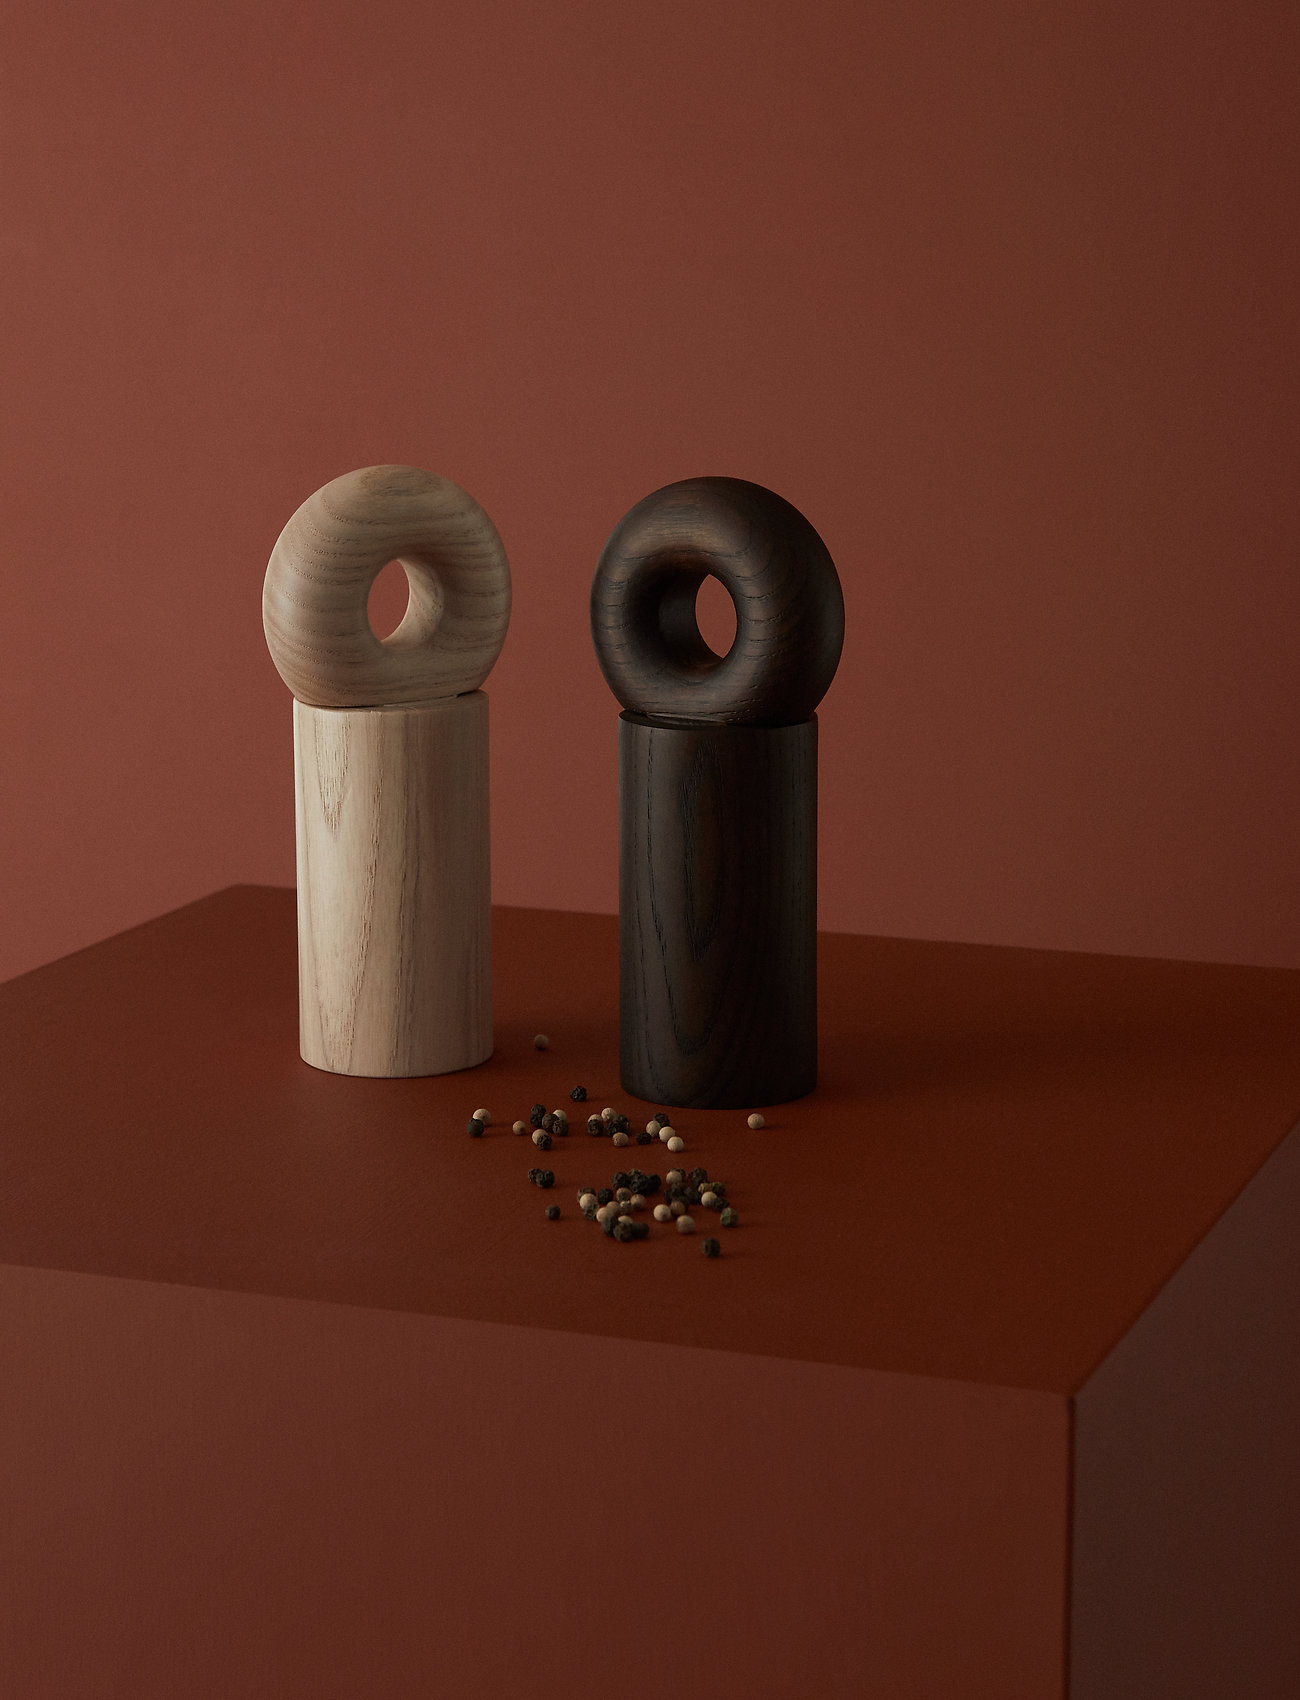 OYOY Living Design - Hoop Mill Grinder - koka figūras - dark - 1